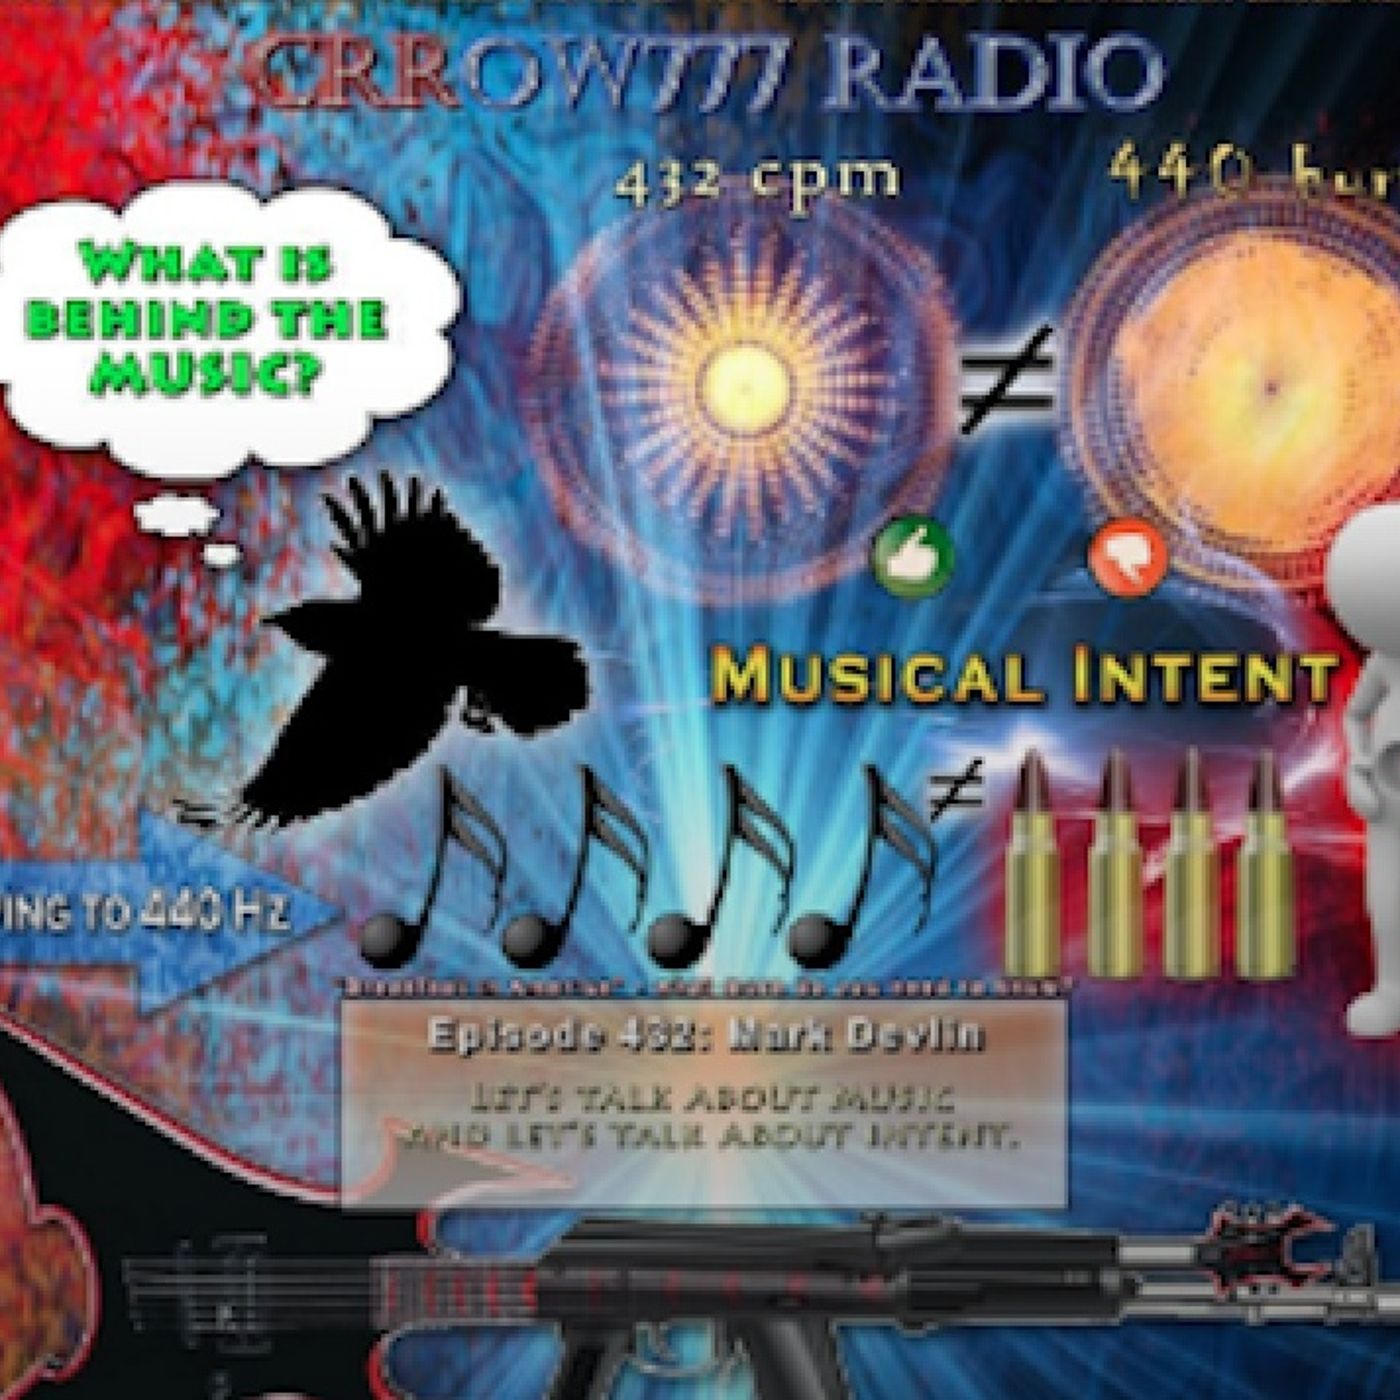 Crrow777 radio excerpt - spiritual signalling in rock songs